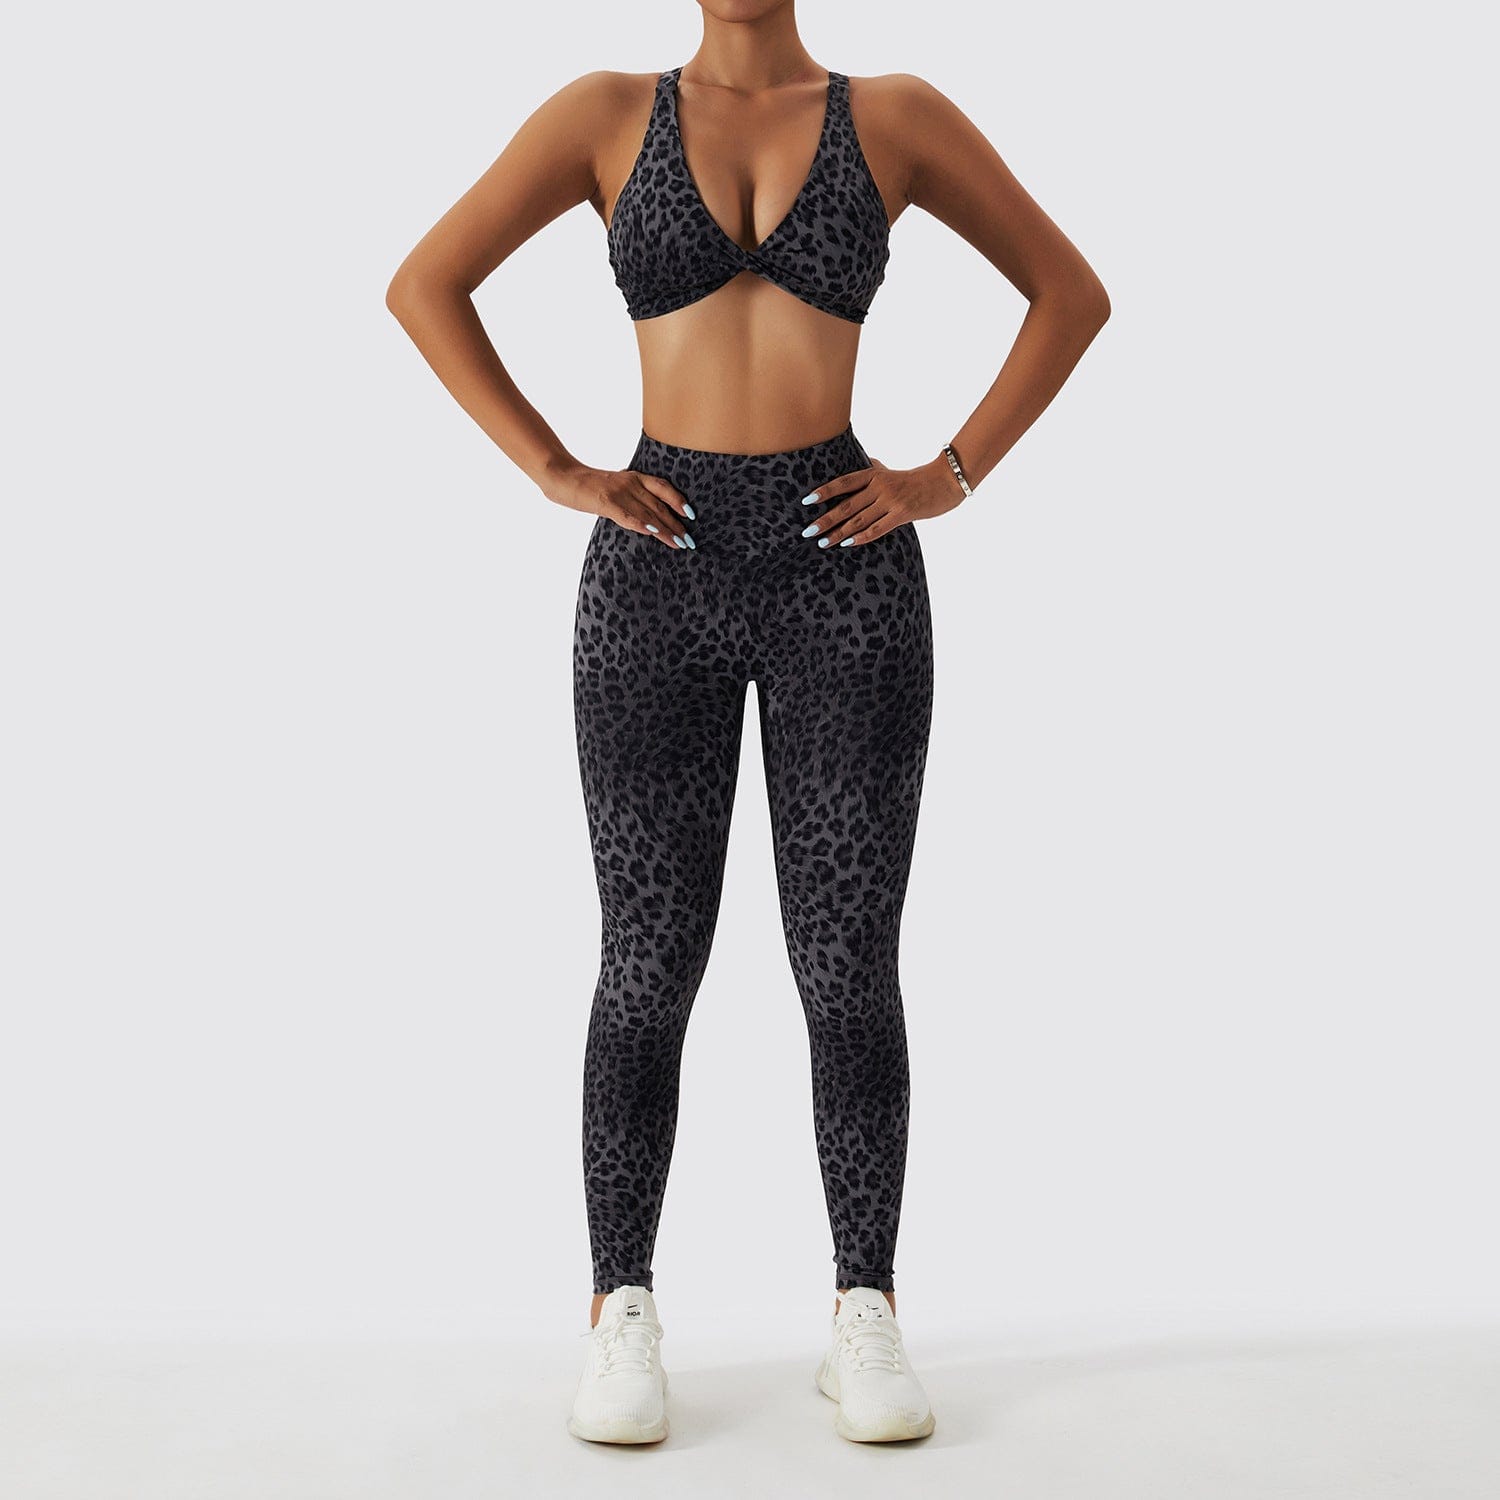 ABOCIW Women's Leopard Print Workout Sets Twist Sports Bras Cross Back Yoga  Bra High Waist Booty Shorts 2 Piece Gym Outfits